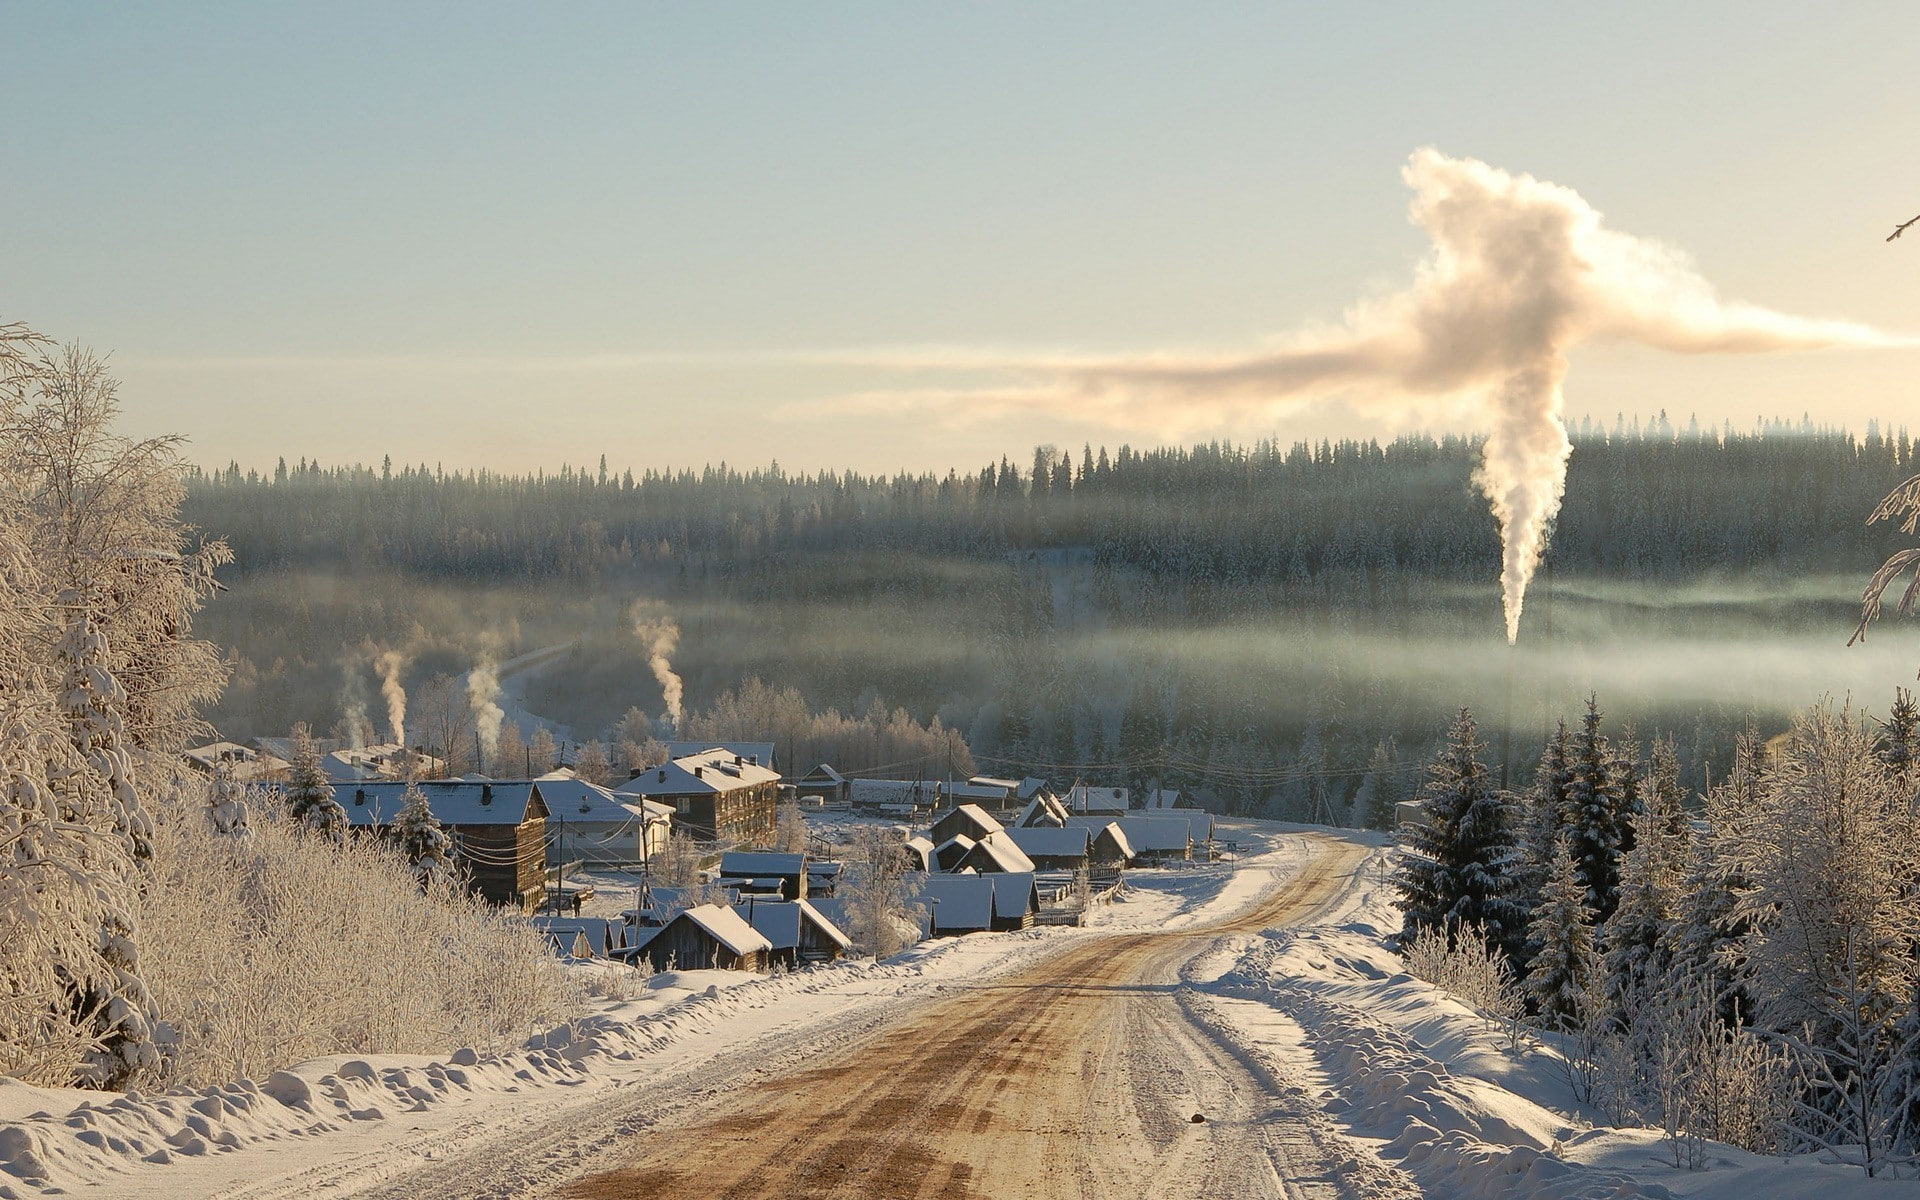 landscape, russia, Siberia, winter, tree, sky, smoke - physical structure